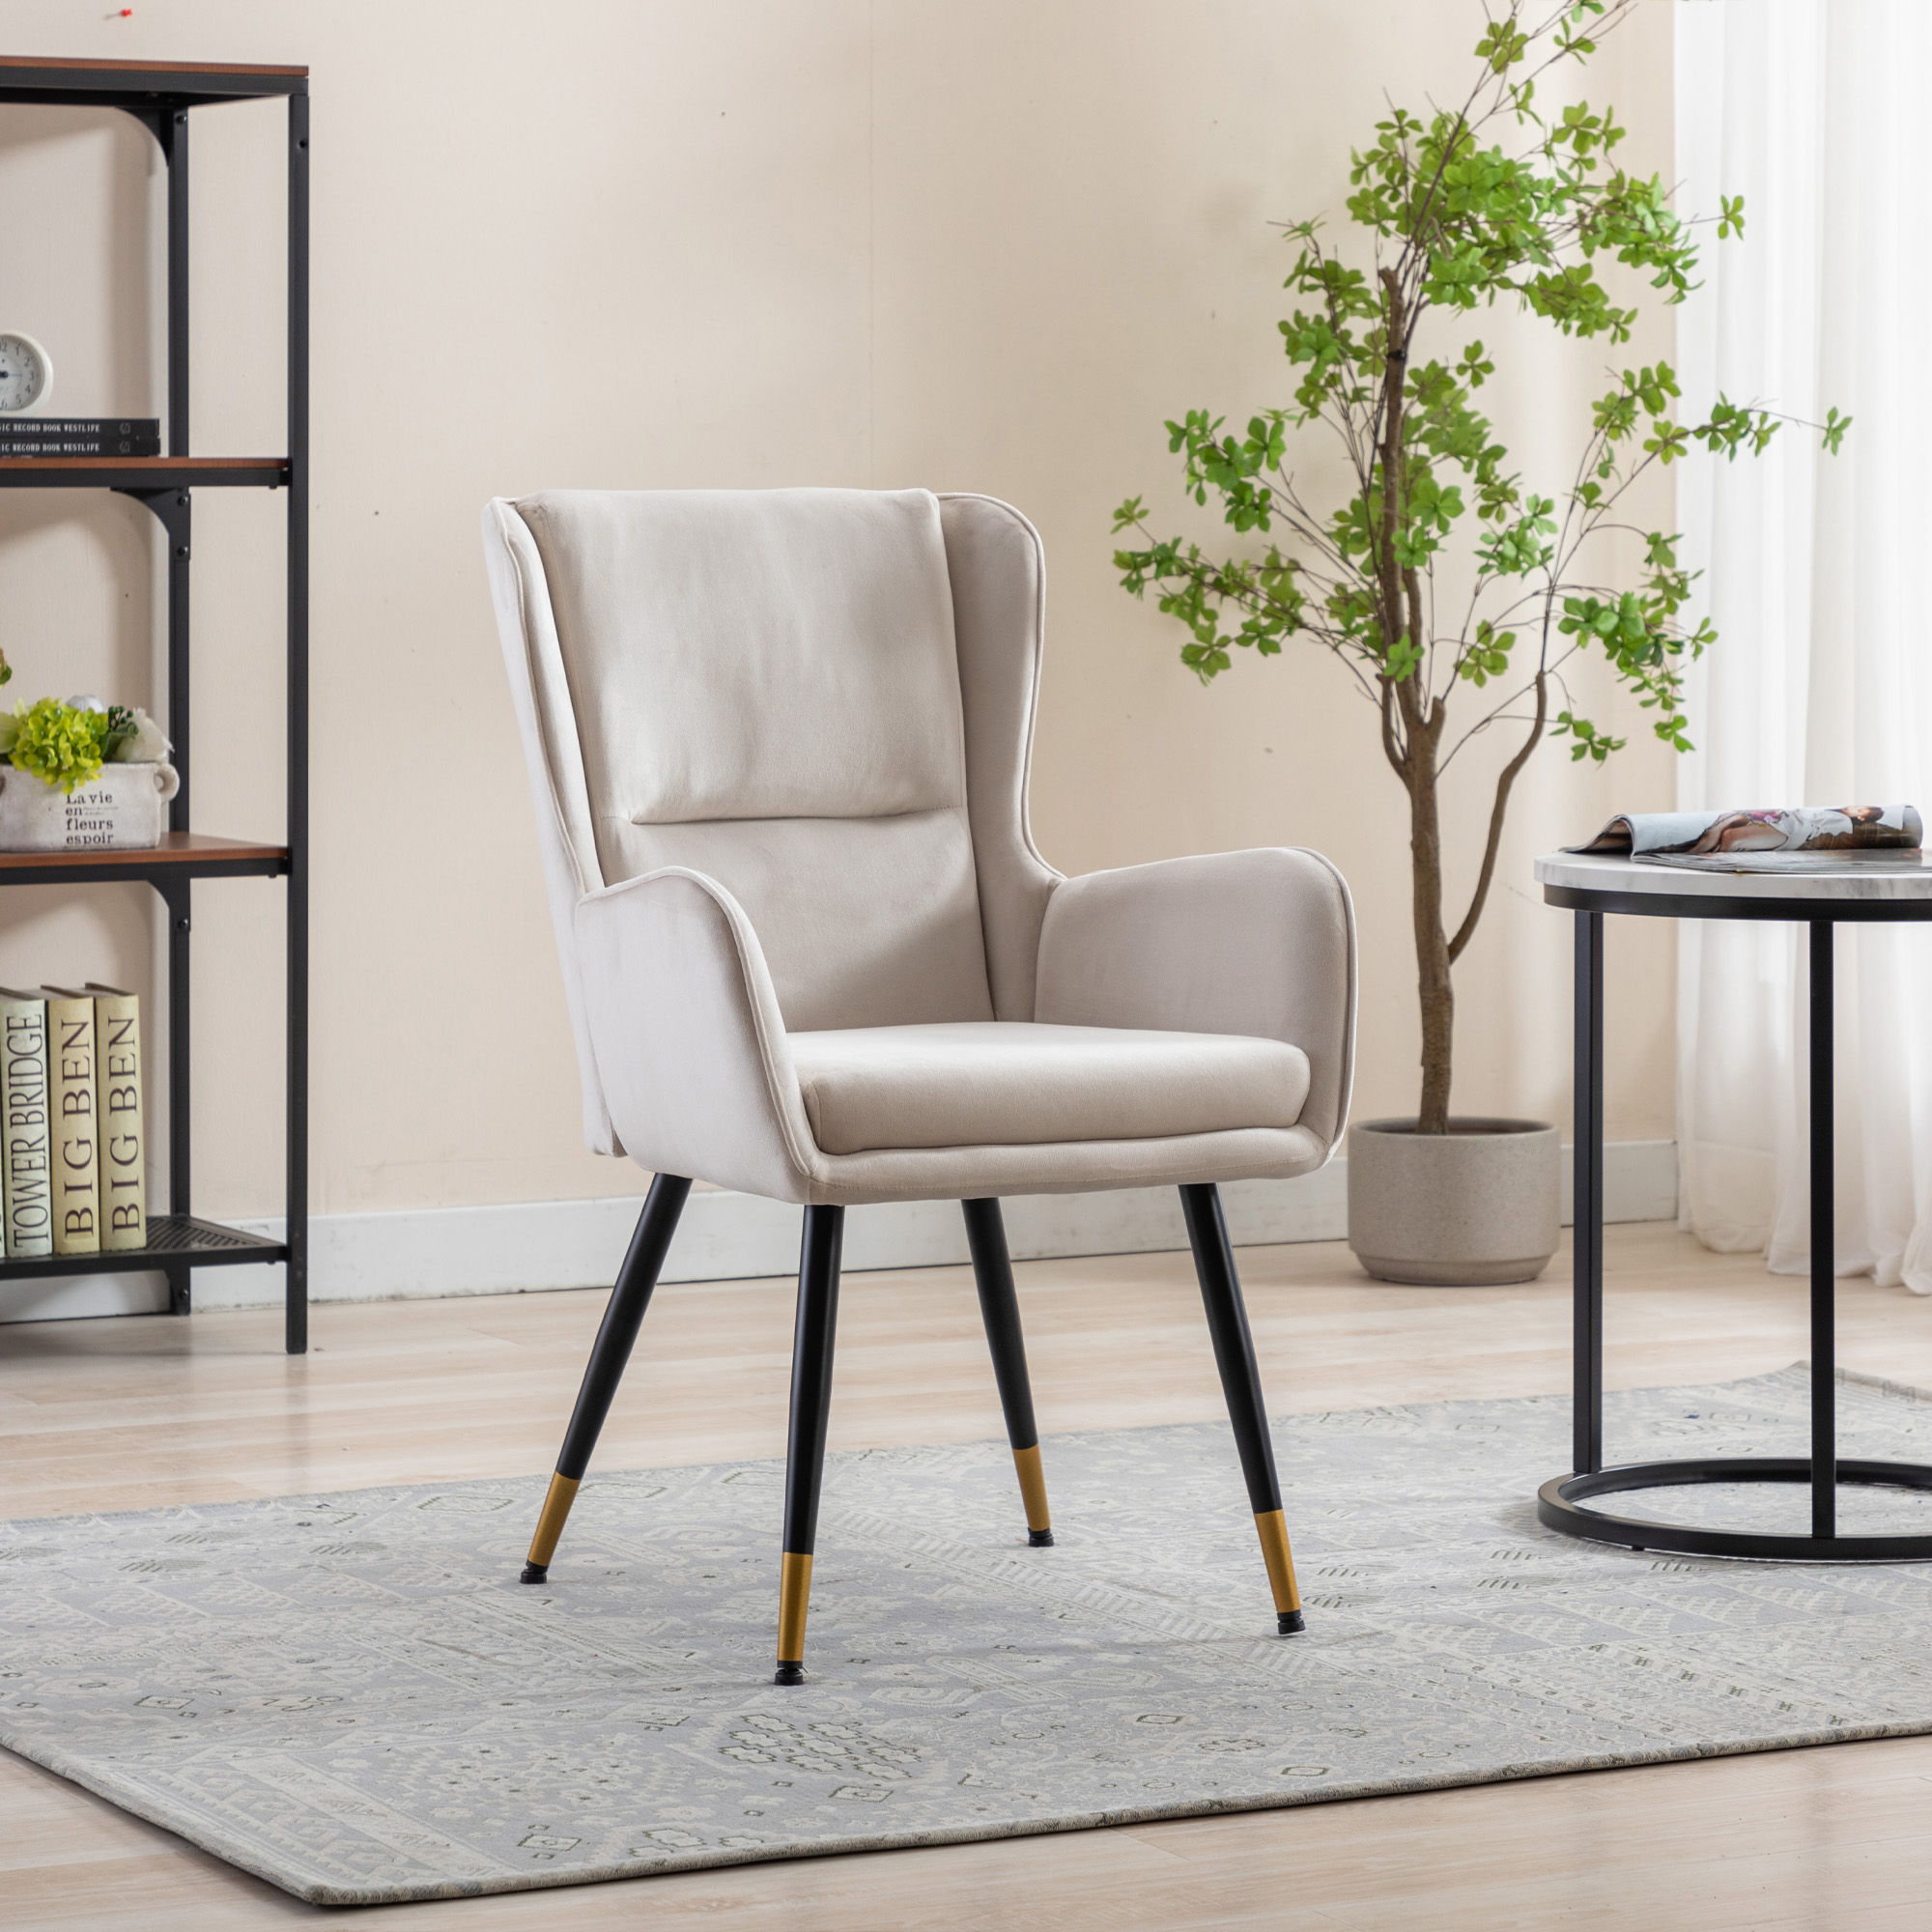 HengMing Velvet Accent Chair Comfy Arm Chair High Back for Bedroom/Living Room/Reading/Desk,Beige